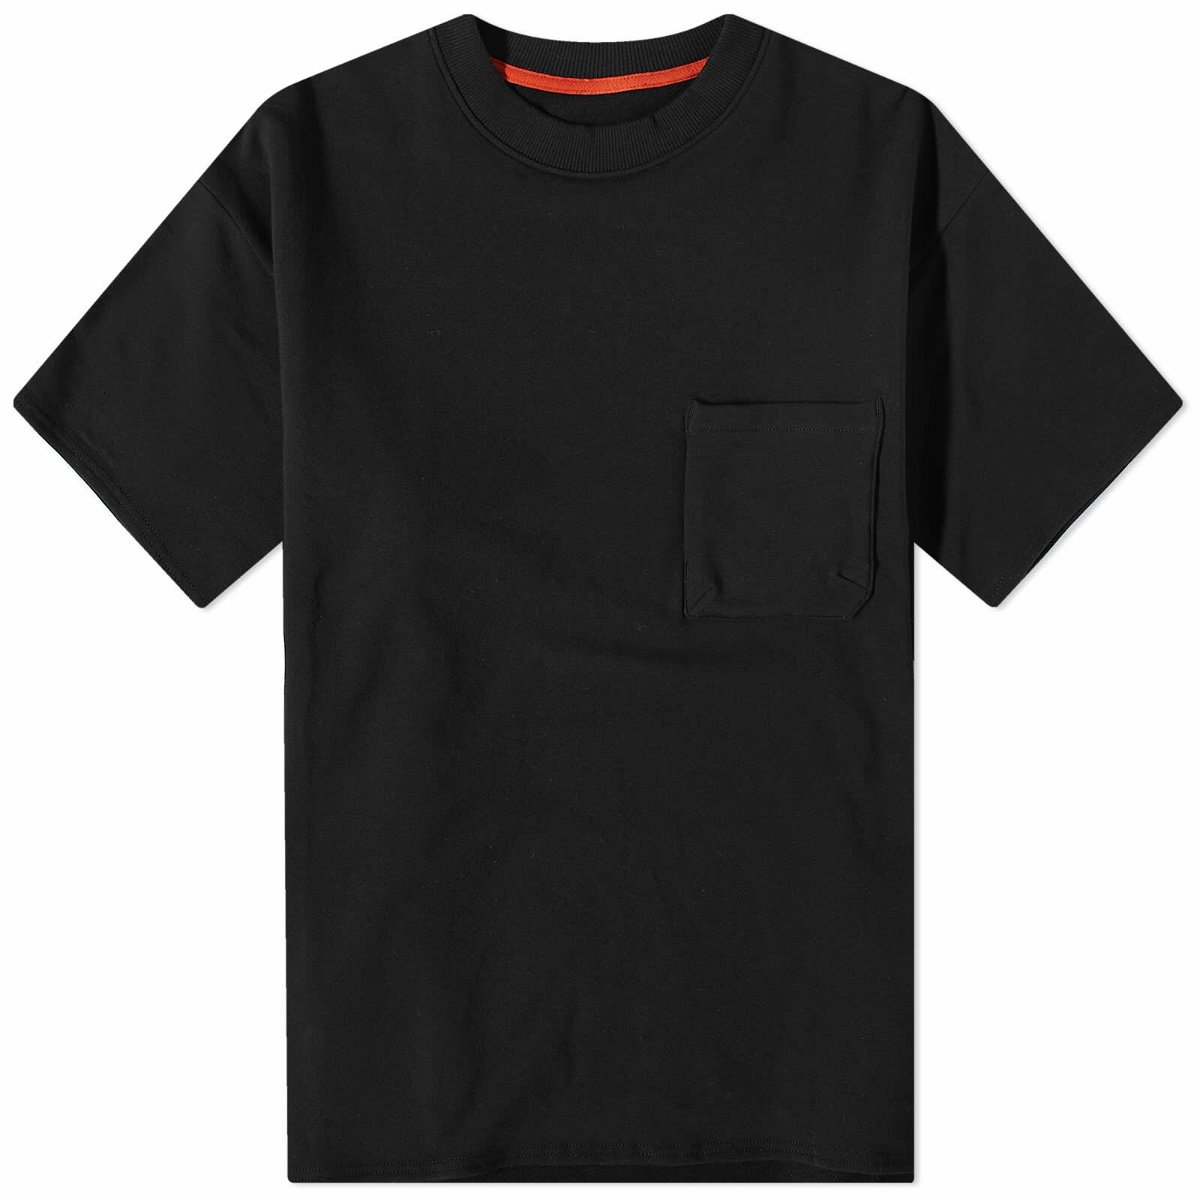 GOOPiMADE Men's ® Long Sleeve Archetype-01 3D Pocket T-Shirt in Shadow  GOOPiMADE